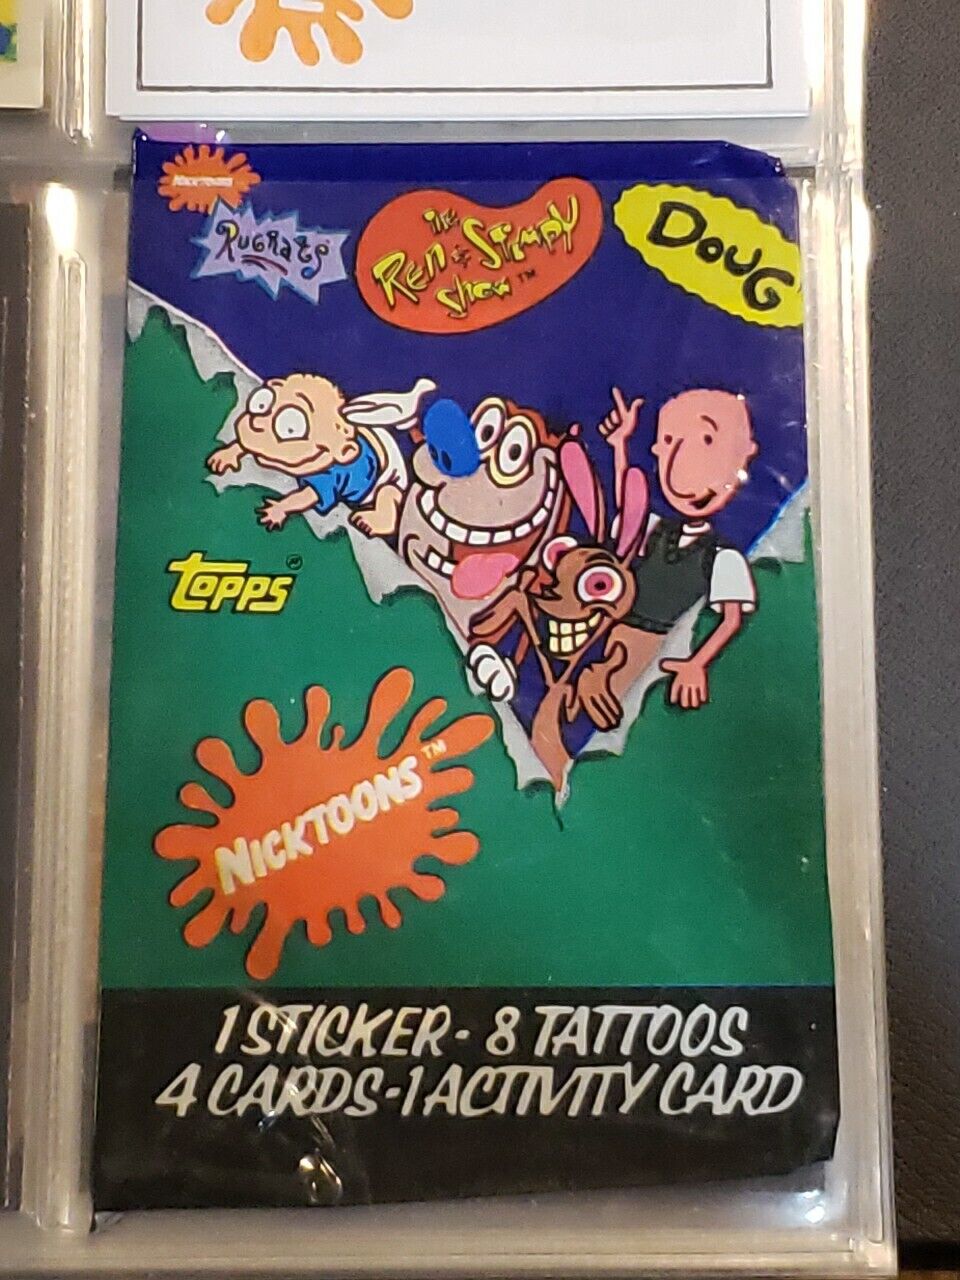 Nicktoons Complete Set Topps 1993 Trading Cards Rugrats Doug Ren & Stimpy, Promo